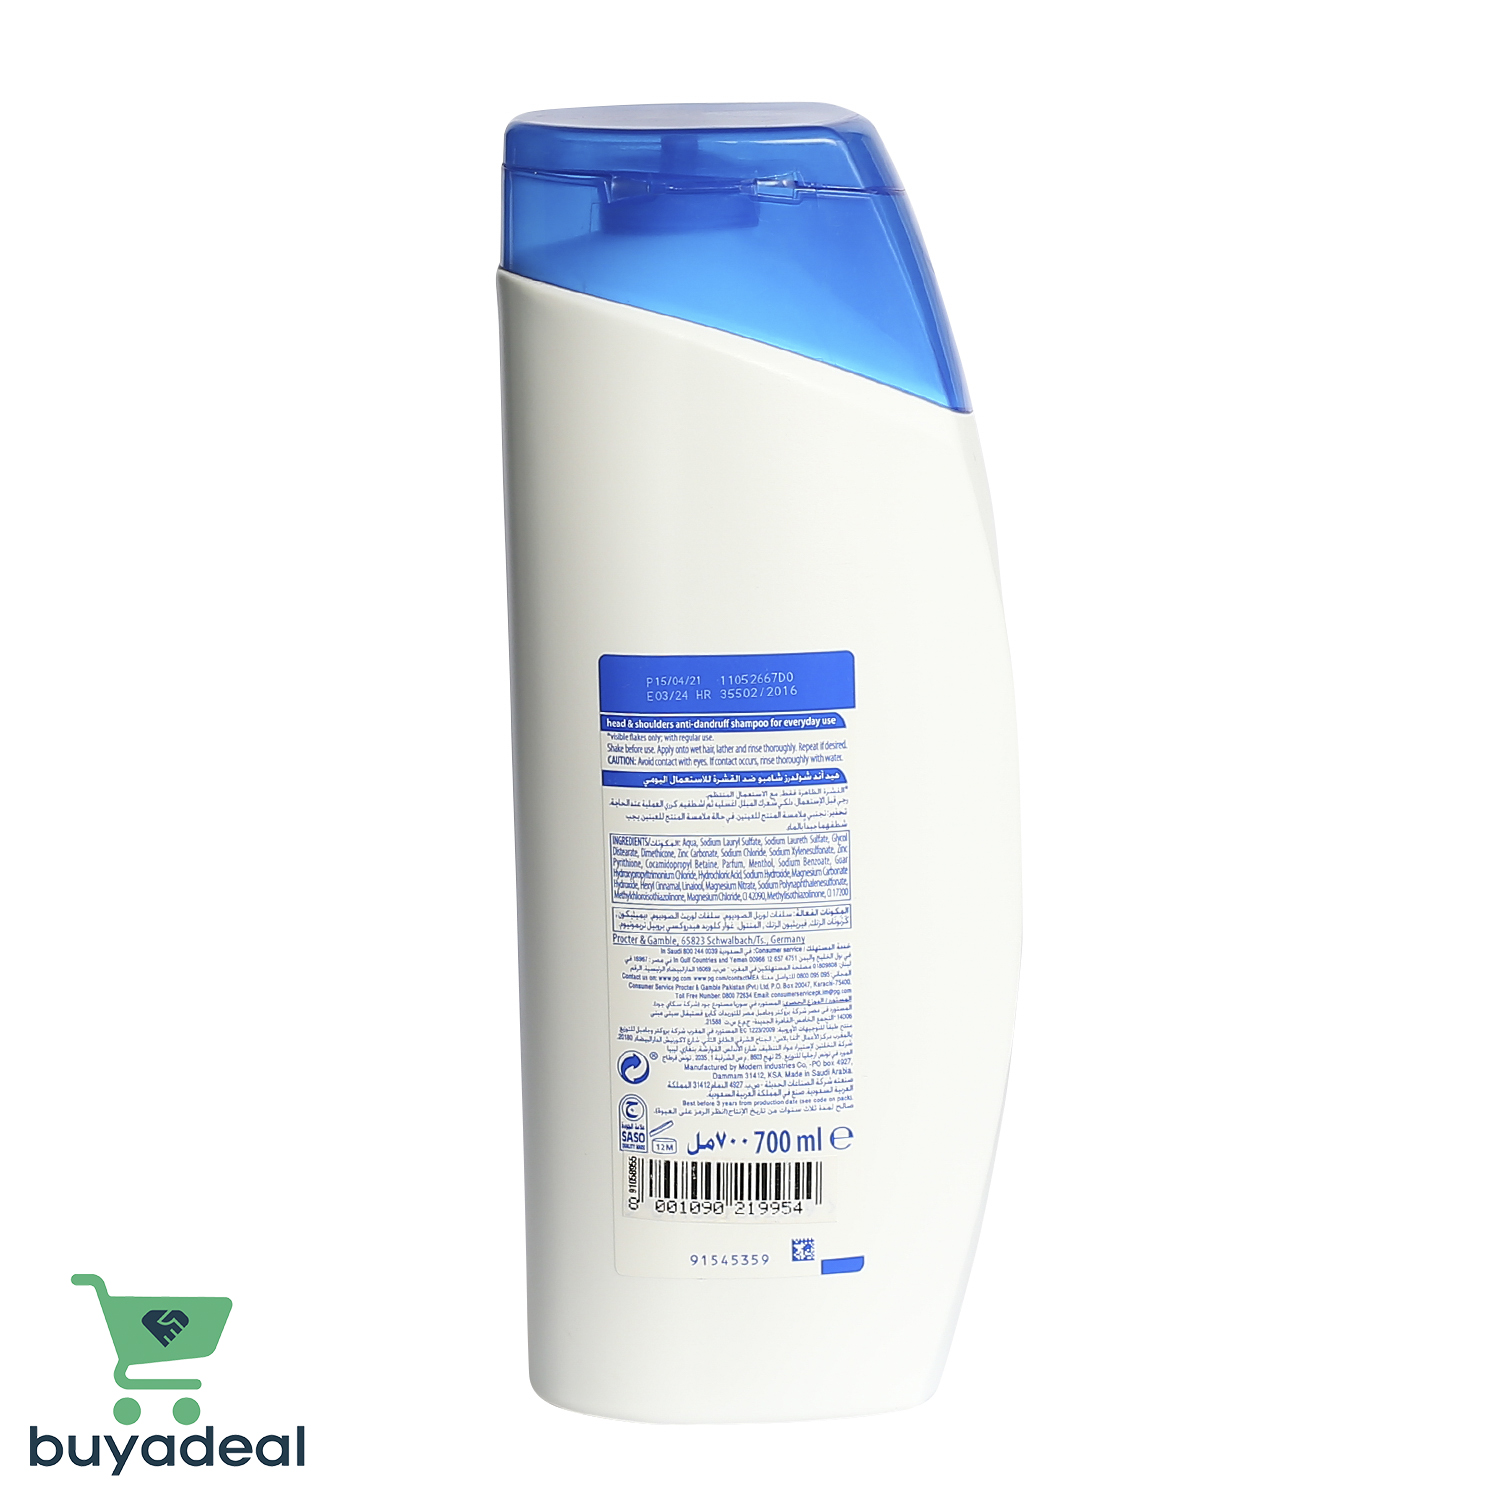 Buyadeal Product Head & Shoulders Anti-Dandruff Menthol Refresh Shampoo - 400ml